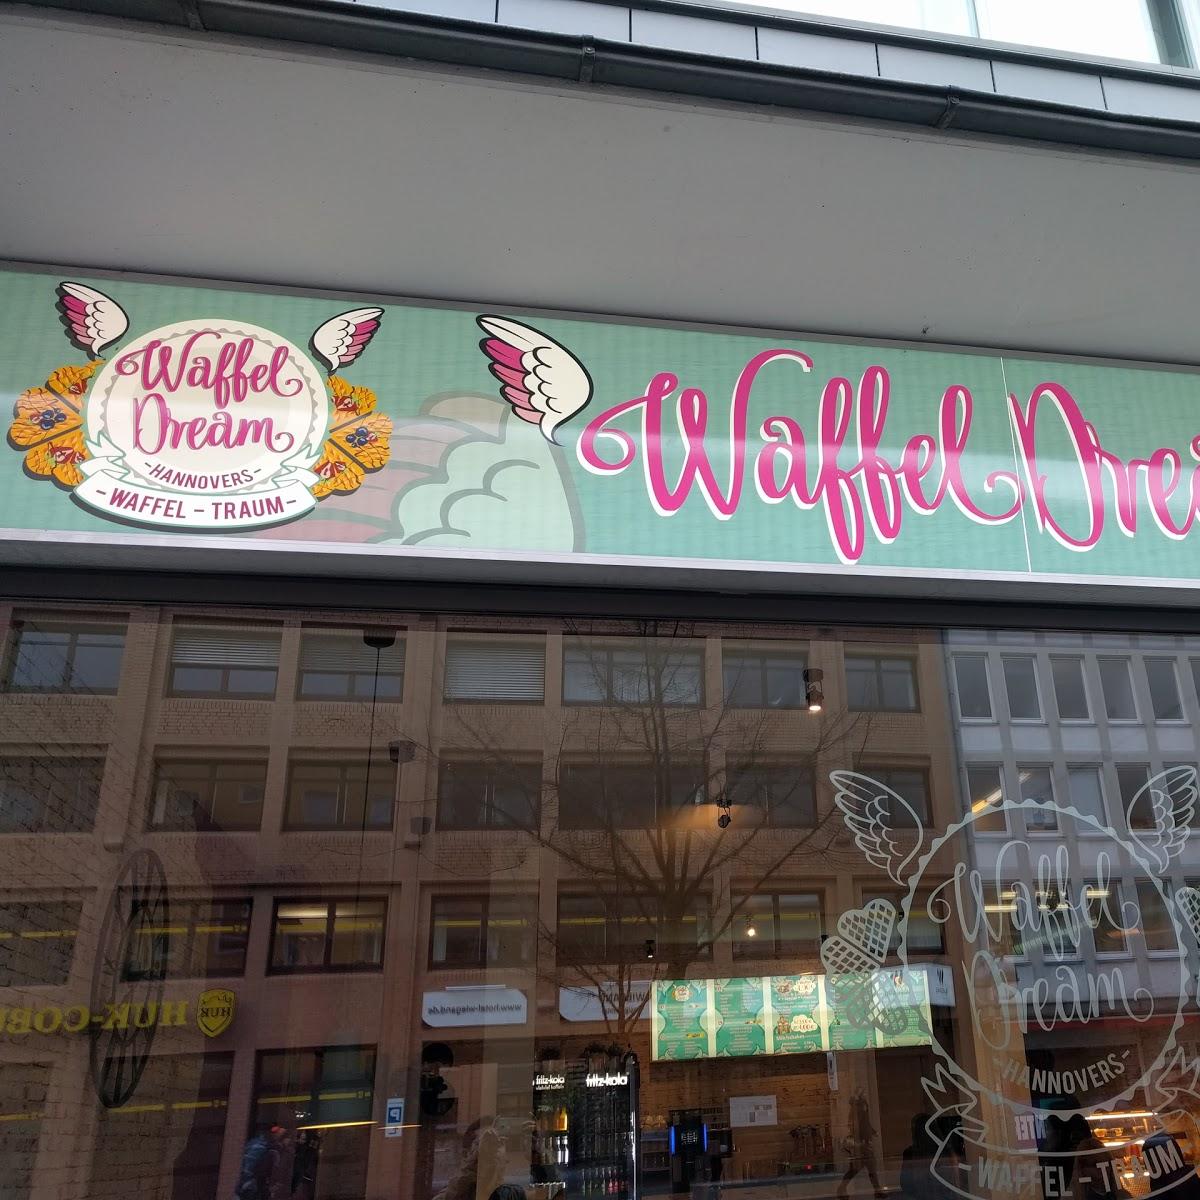 Restaurant "Waffel Dream" in Hannover